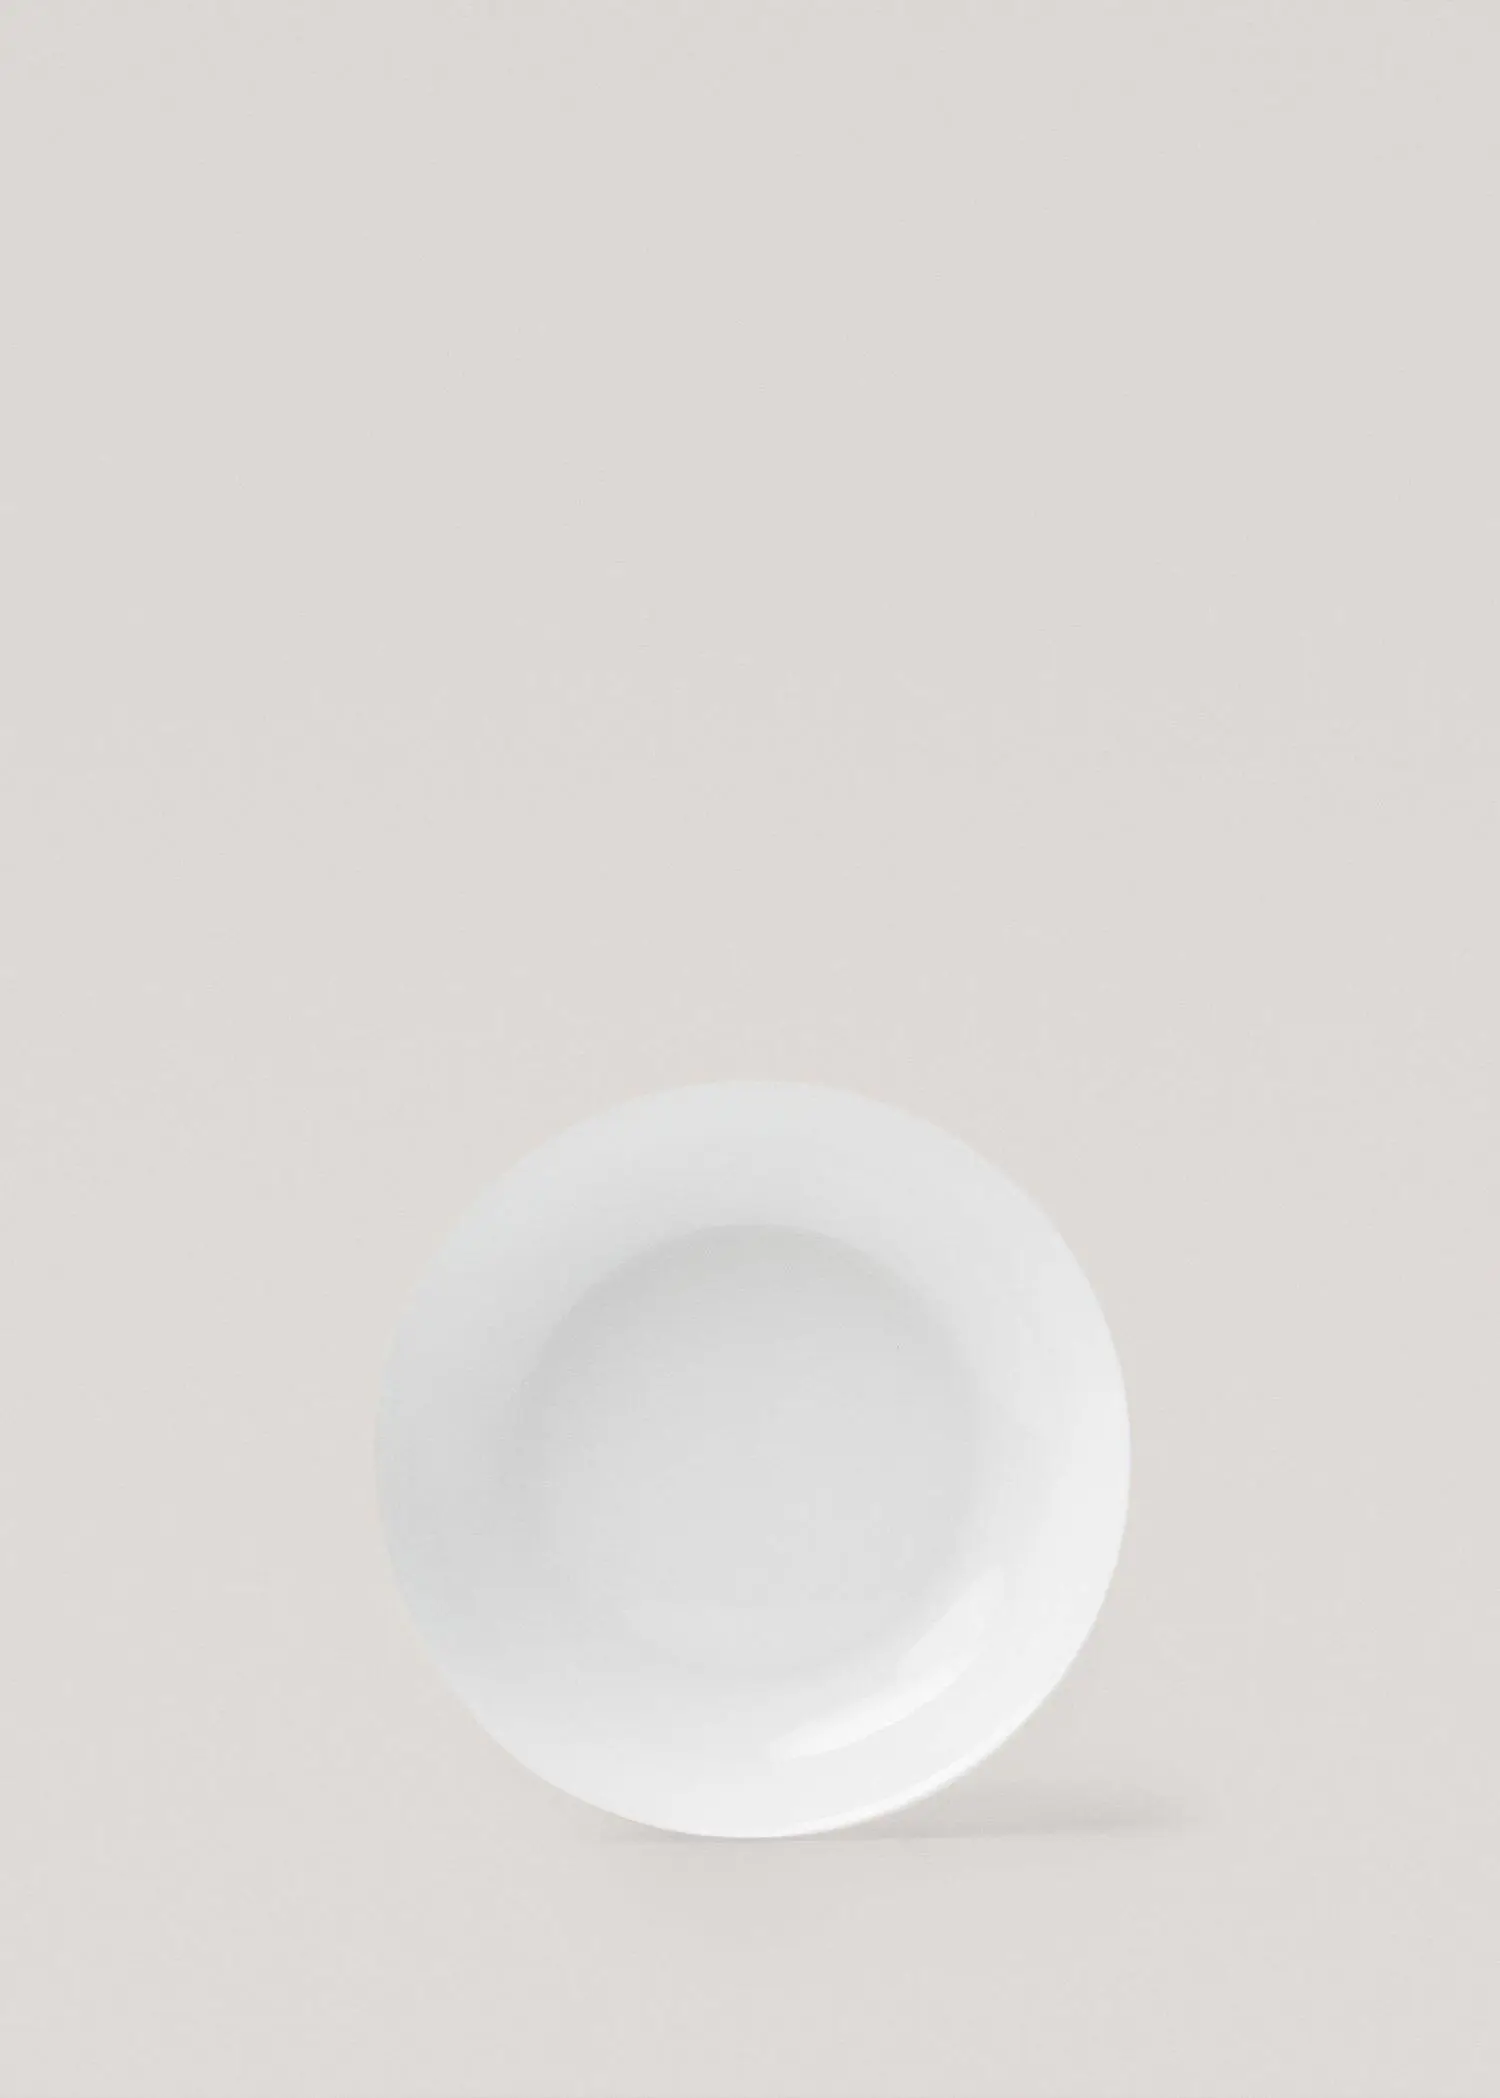 Mango bone china porcelain soup plate. 1